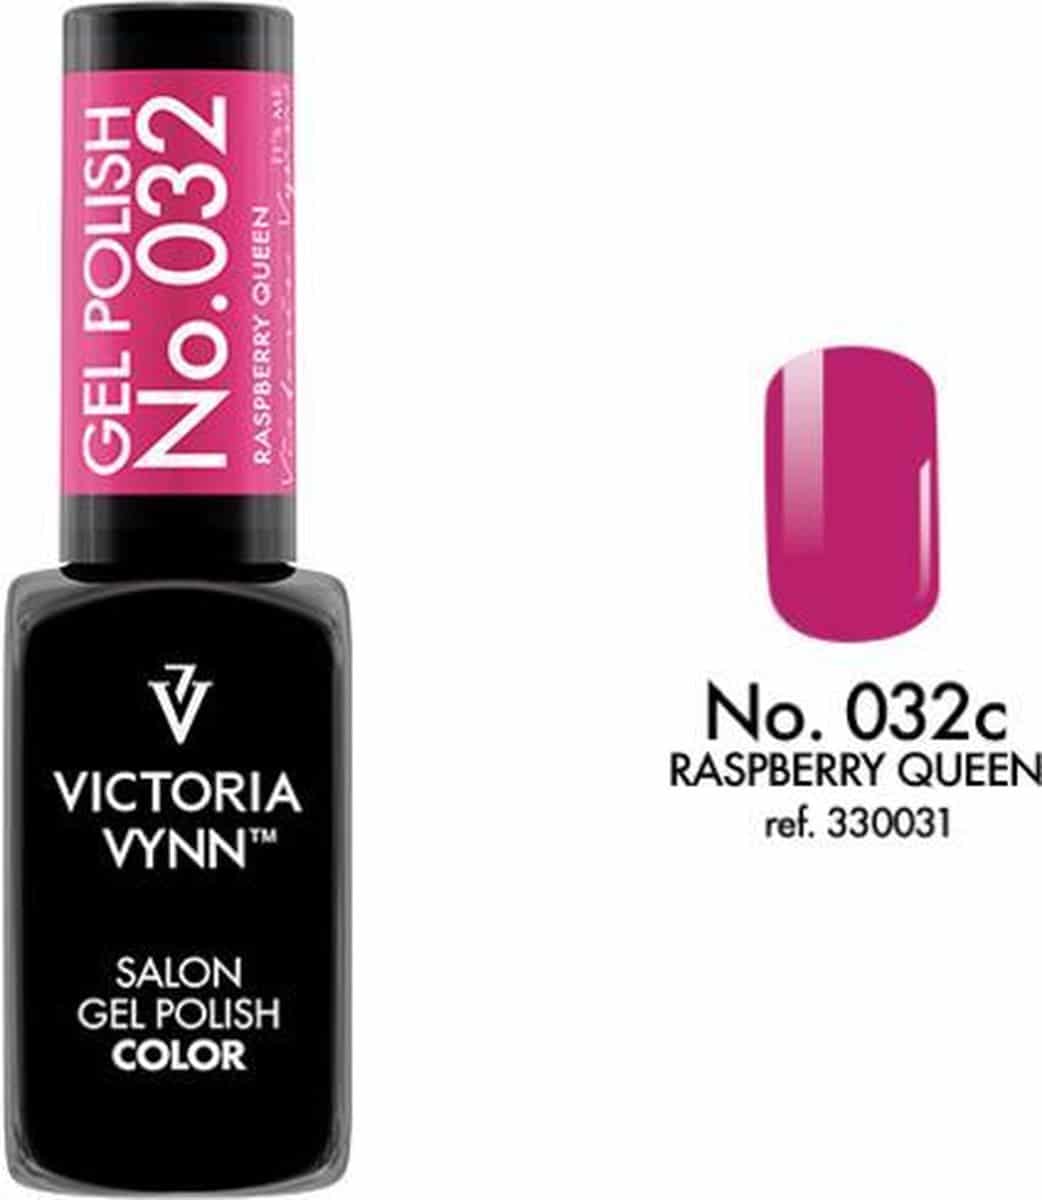 Gellak Victoria Vynn™ Gel Nagellak - Salon Gel Polish Color 032 - 8 ml. - Raspberry Queen